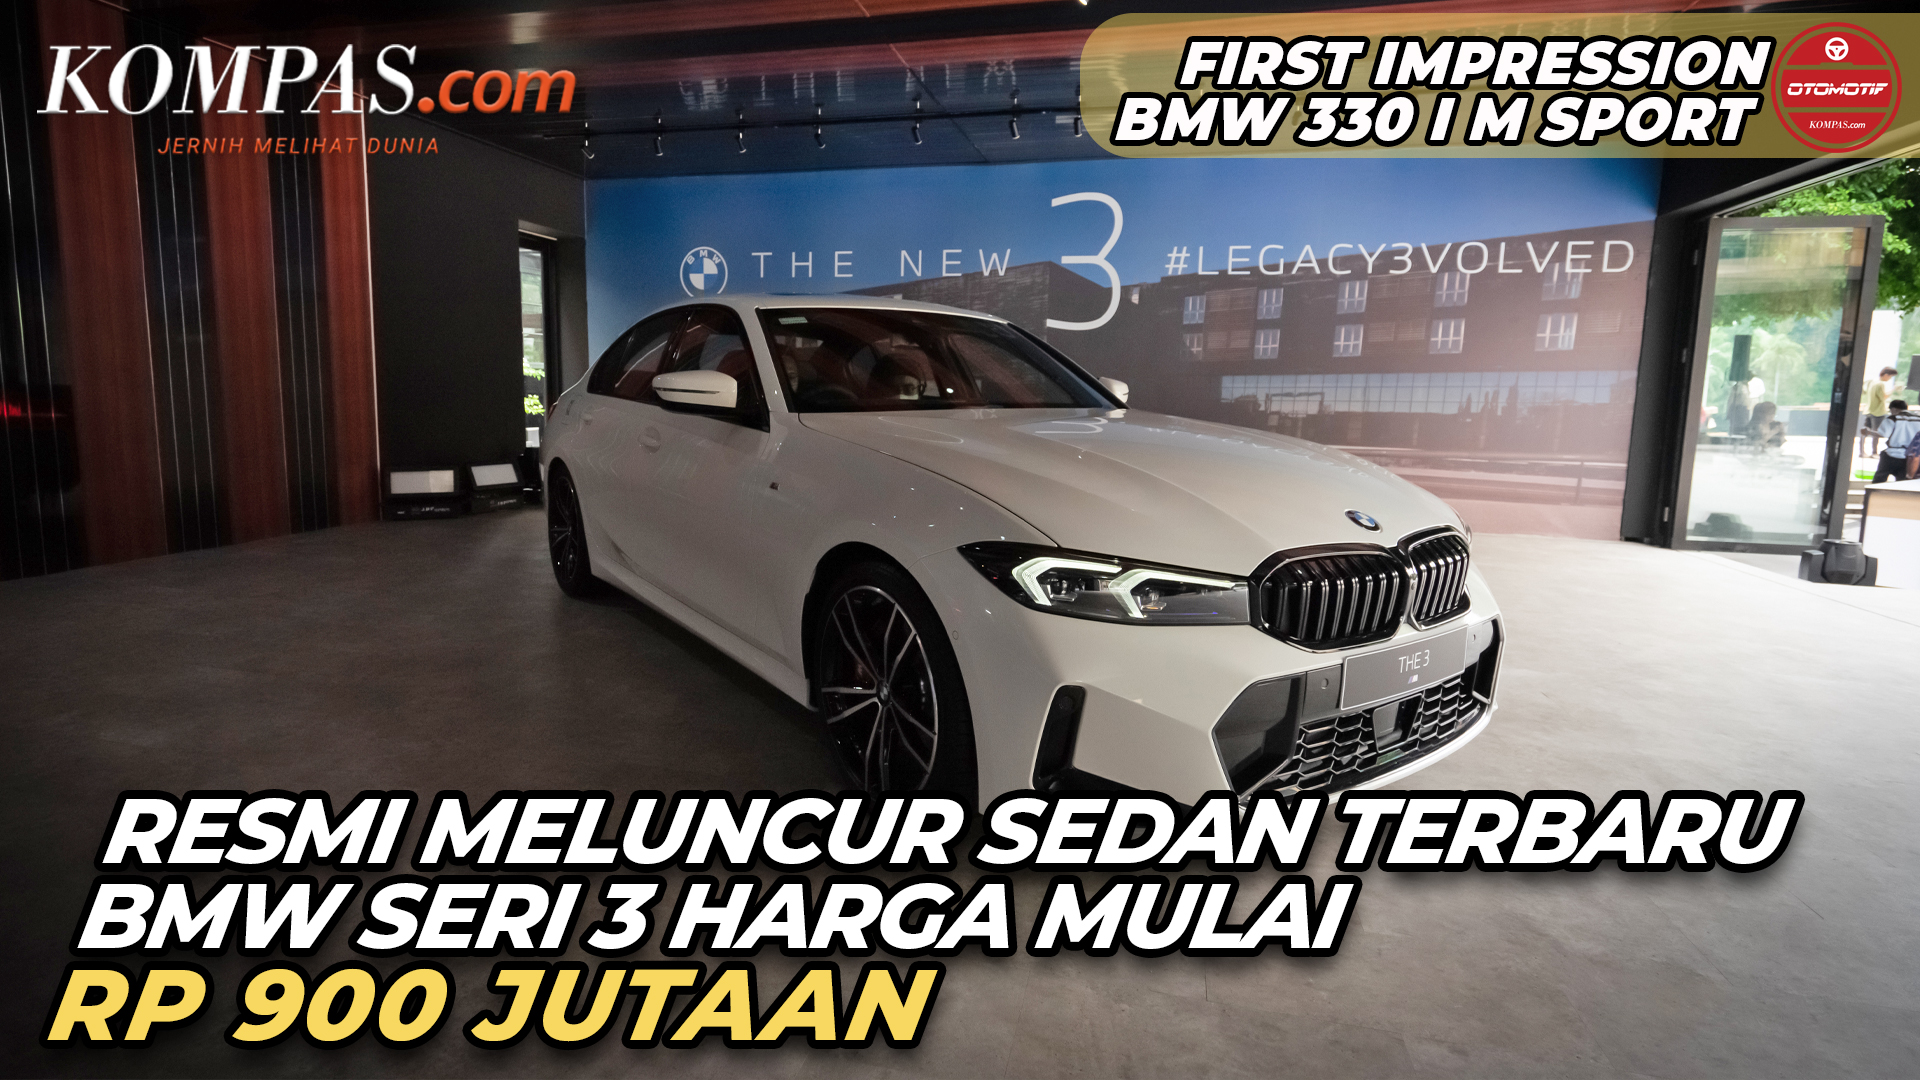 FIRST IMPRESSION |BMW 330i M Sport | Resmi Meluncur Sedan Terbaru BMW Harga Mulai Rp 900 Jutaan